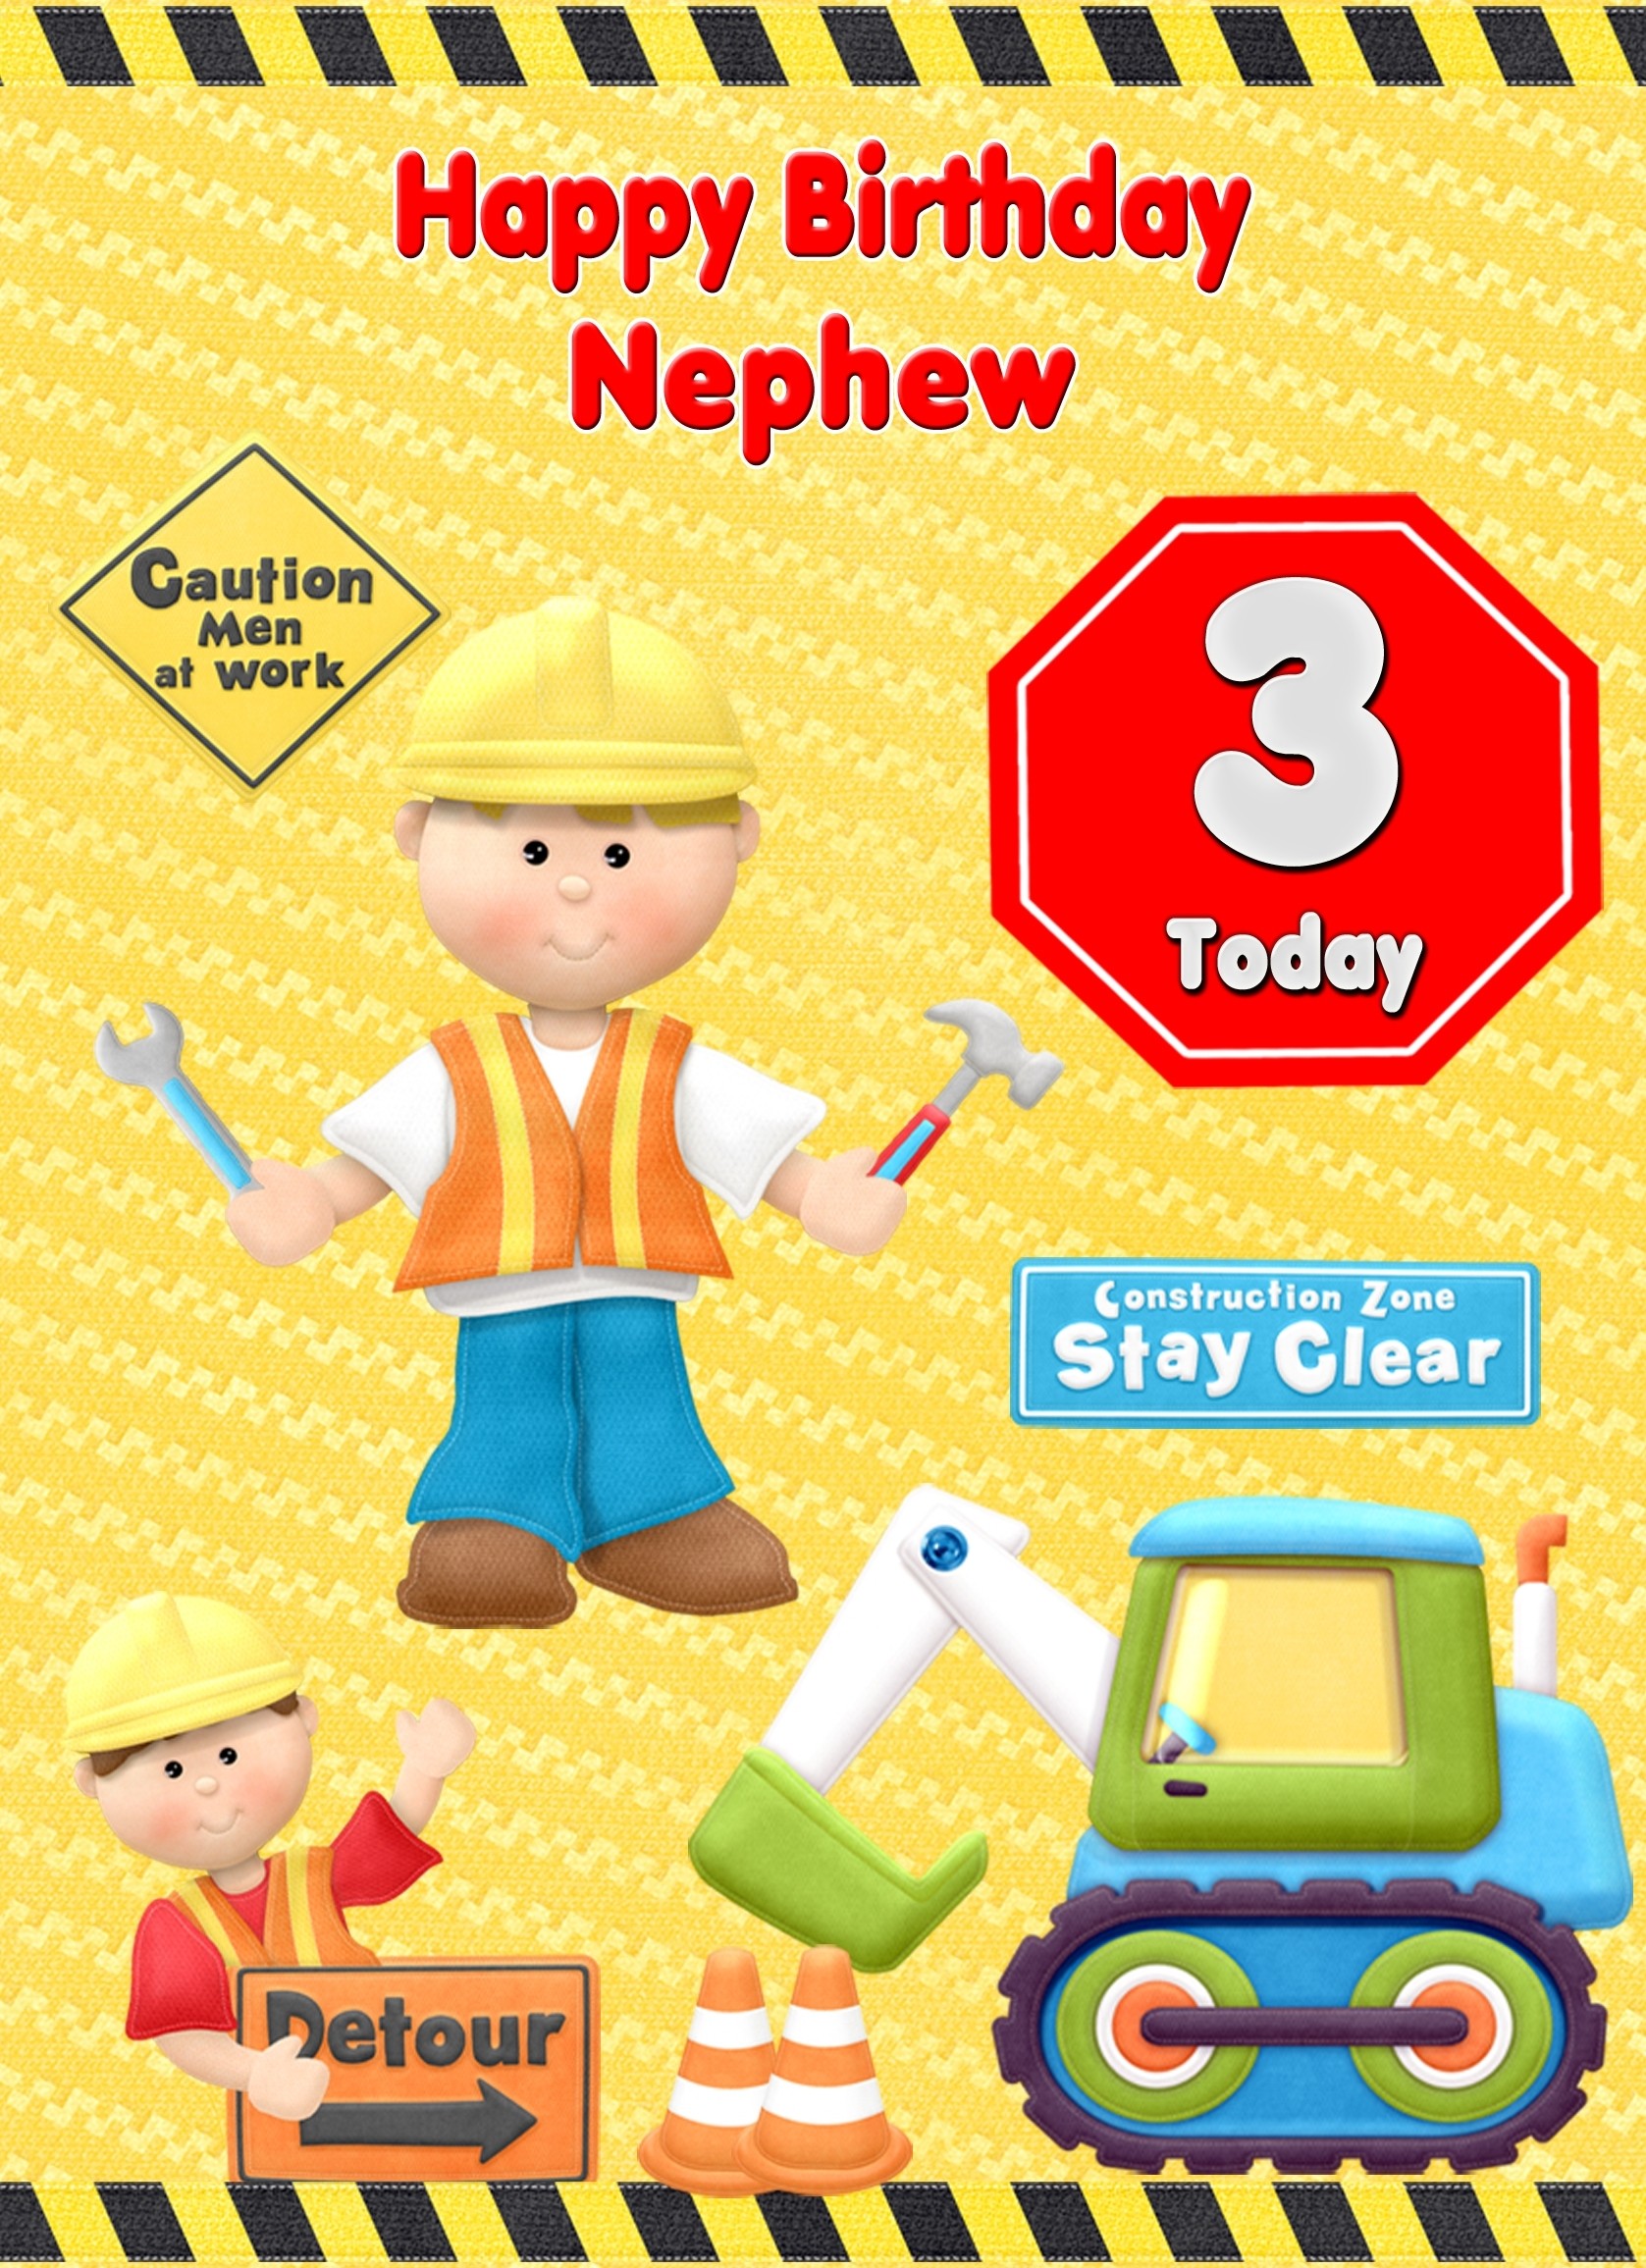 Kids 3rd Birthday Builder Cartoon Card for Nephew